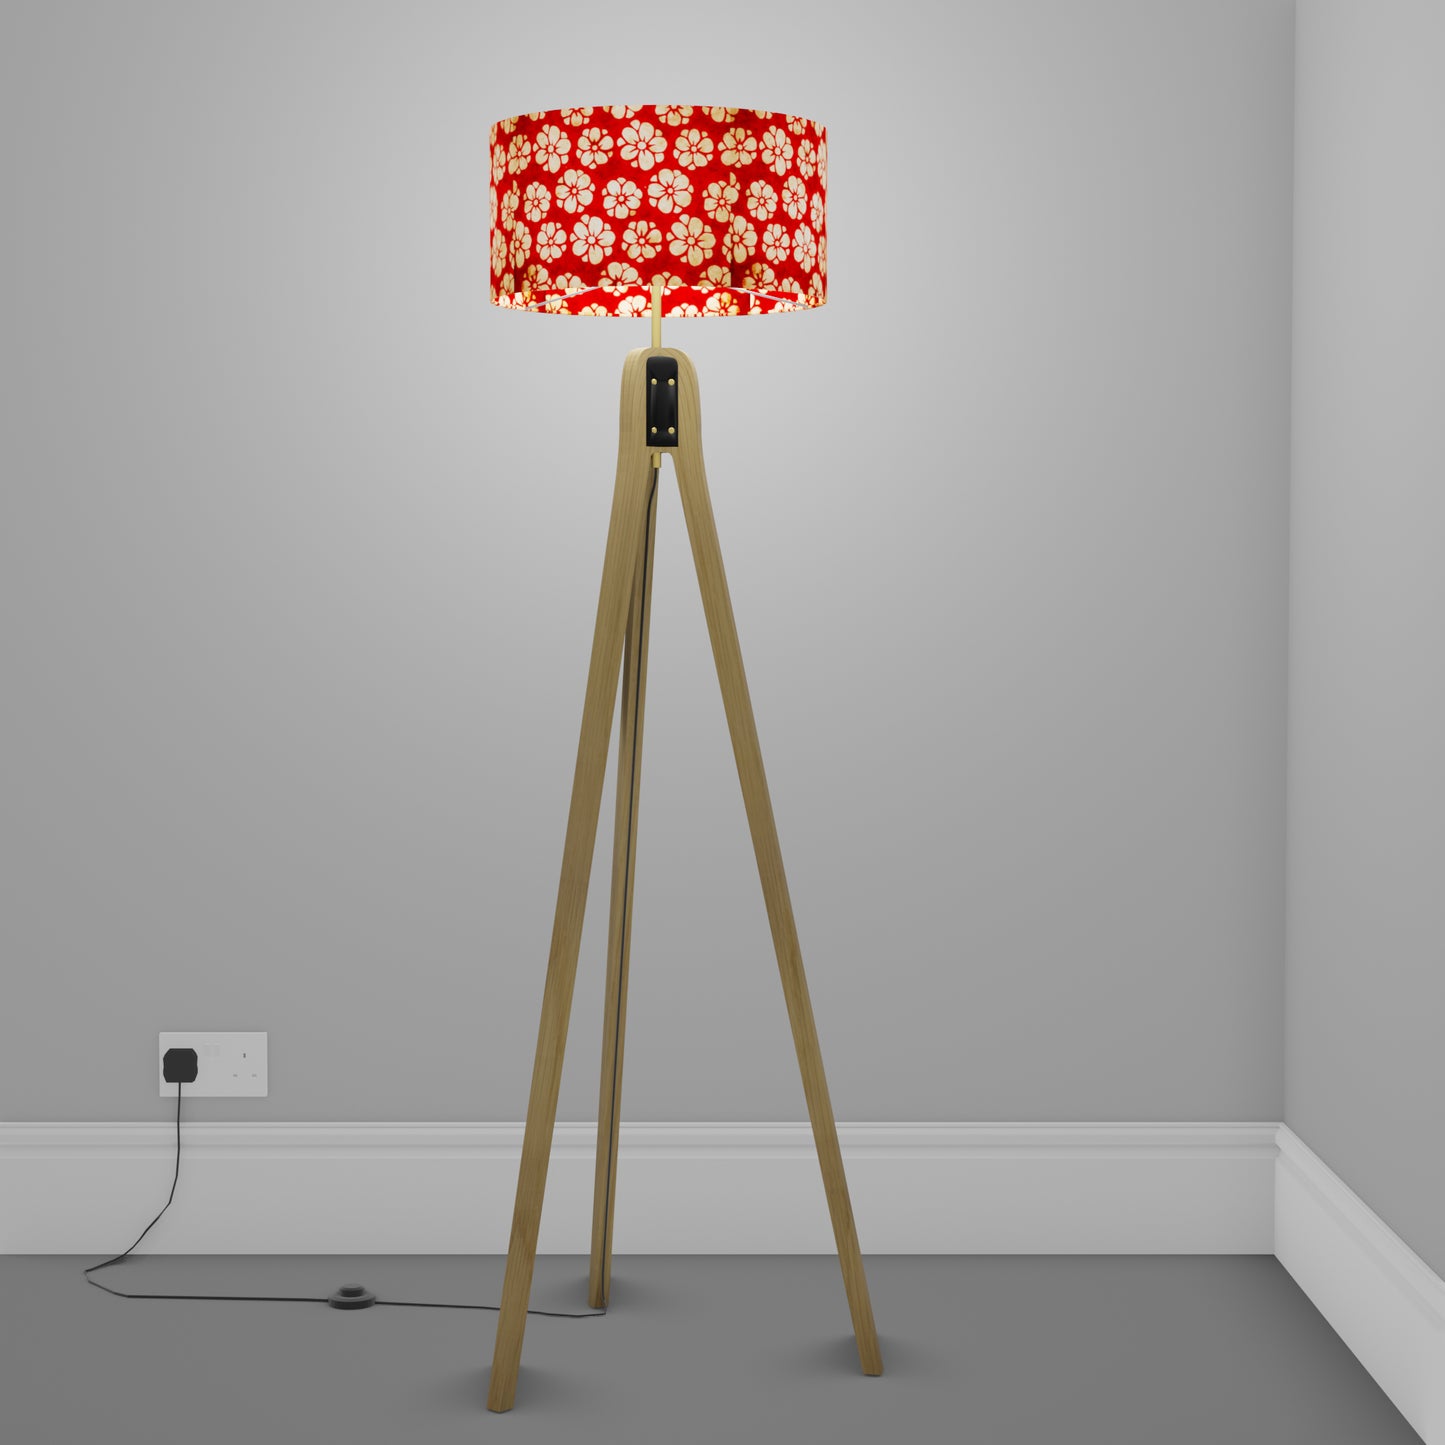 Oak Tripod Floor Lamp - P76 - Batik Star Flower Red